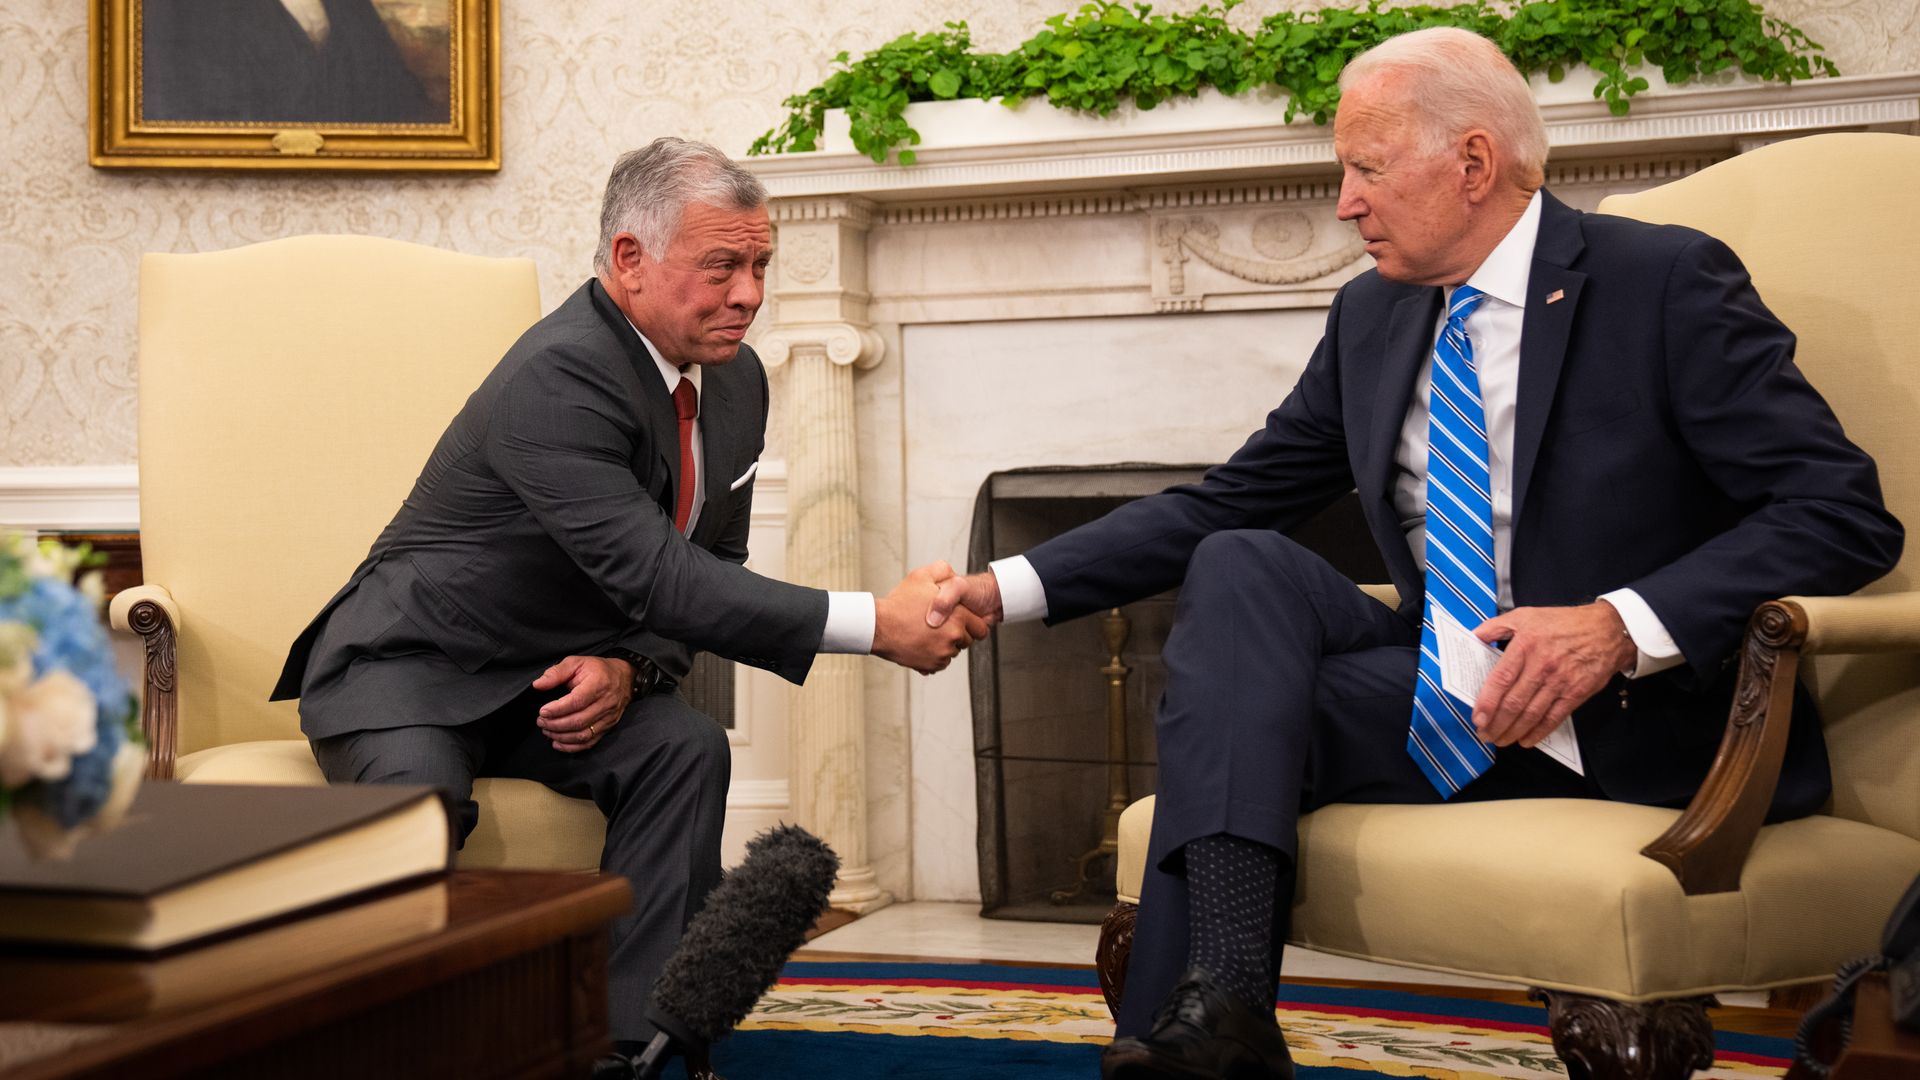 U.S. President Joe Biden and King Abdullah II of Jordan meet in the Oval Office of the White House in Washington, D.C., U.S., on Monday, July 19, 2021.